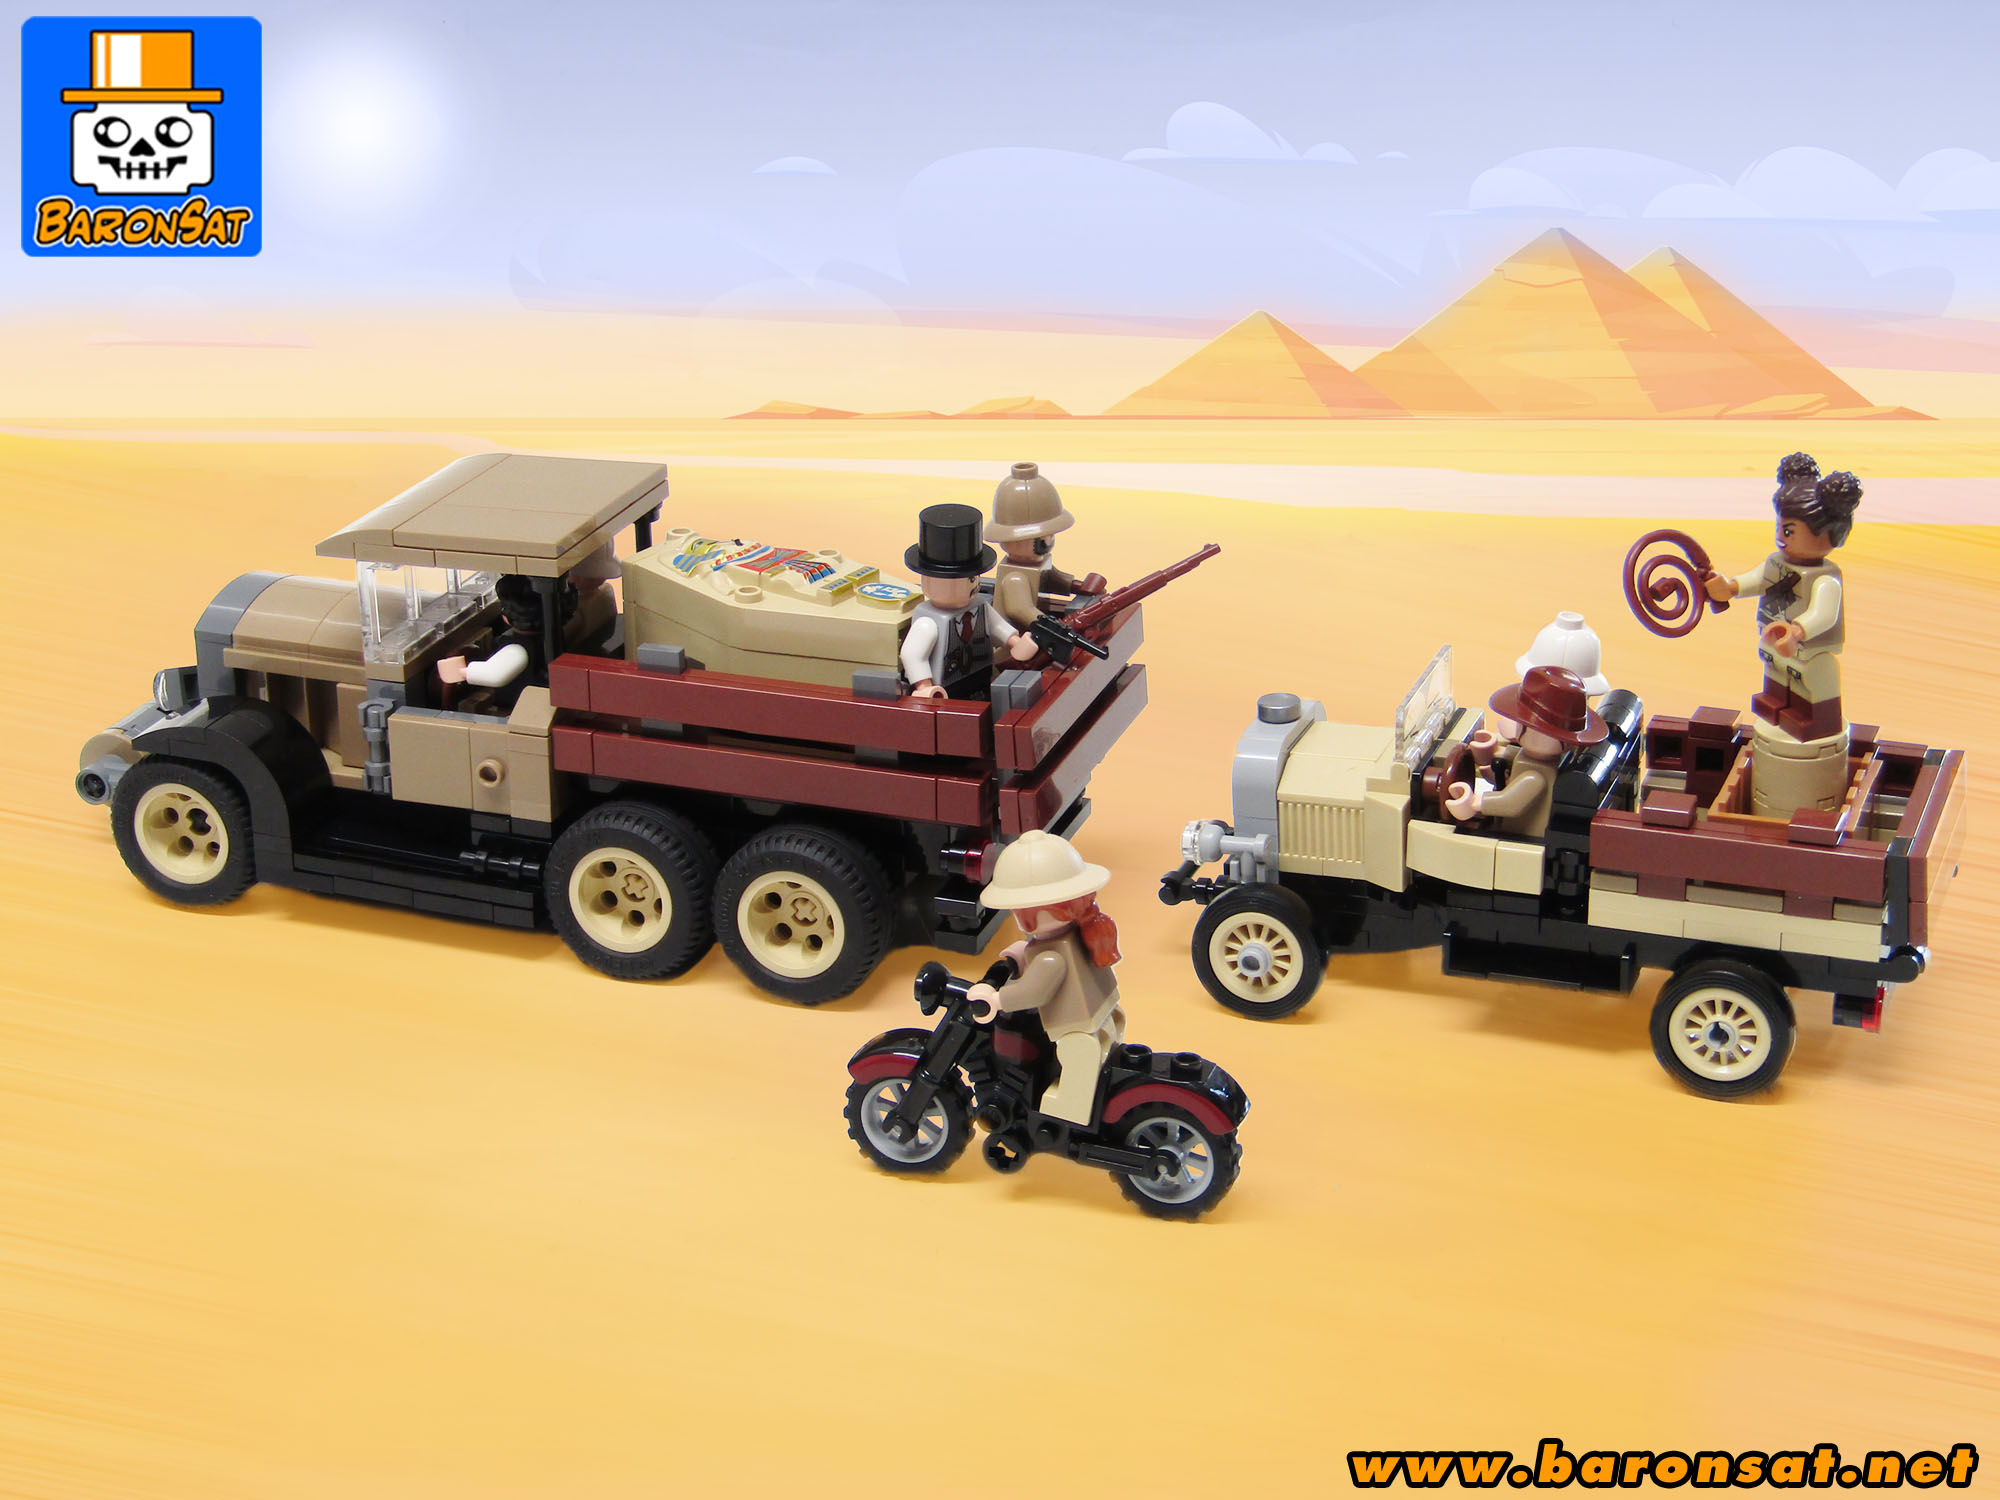 Lego moc Adventurers Redux Truck Chase in Desert